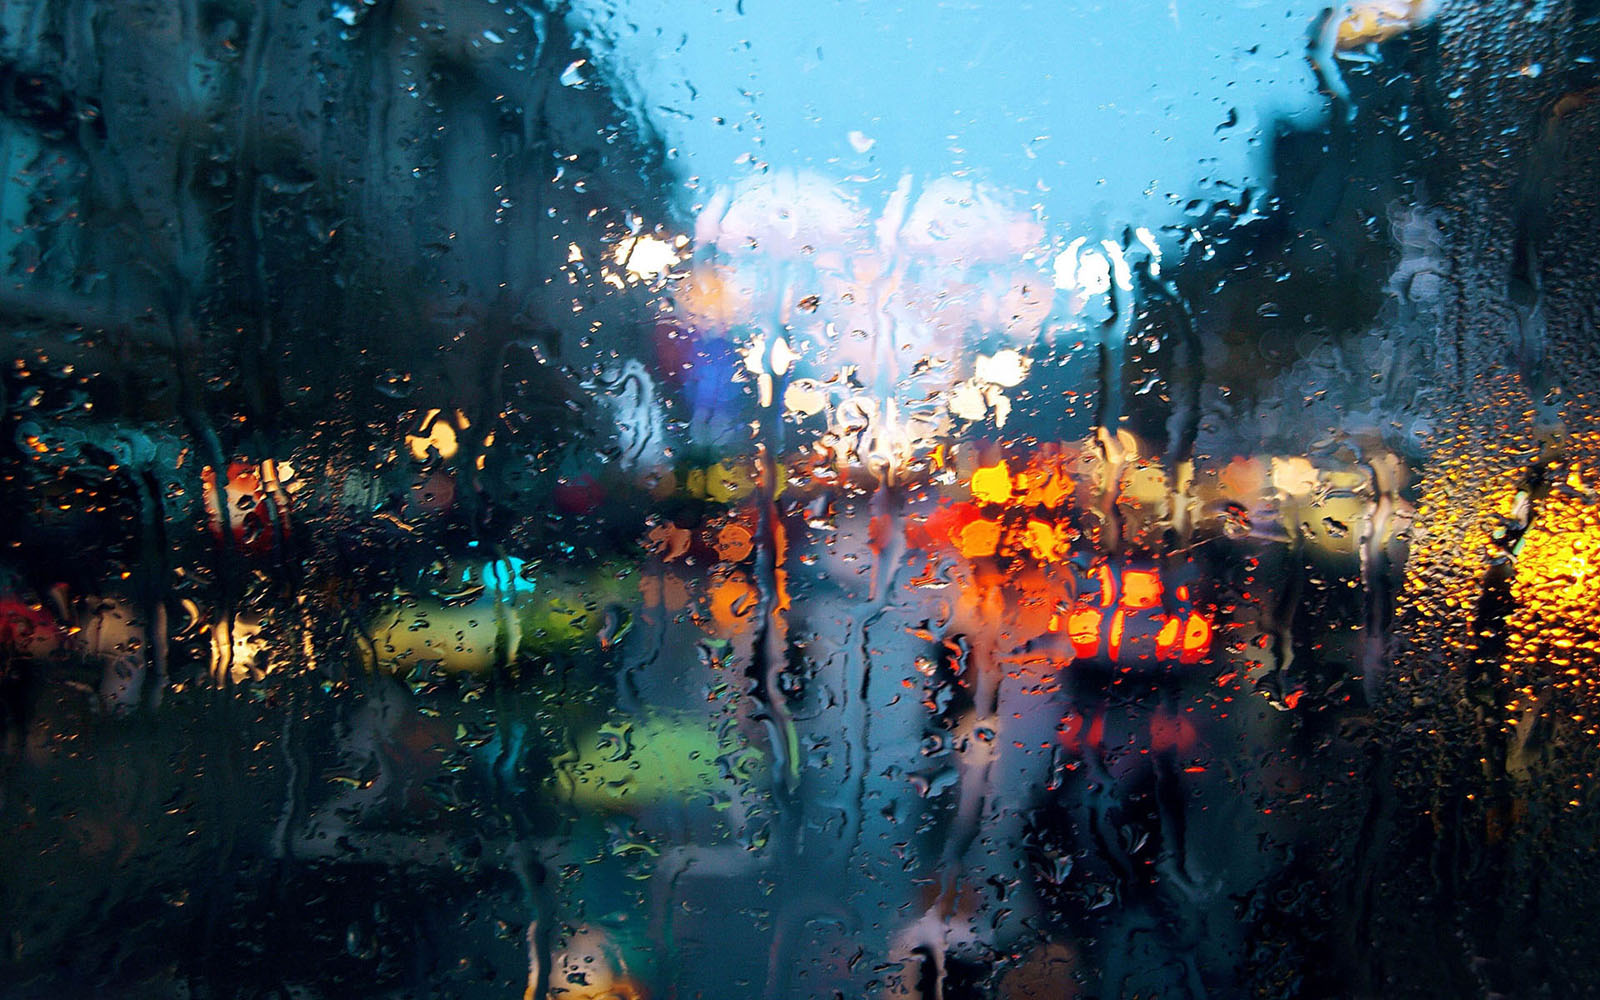 Rain On Window Photos Download The BEST Free Rain On Window Stock Photos   HD Images